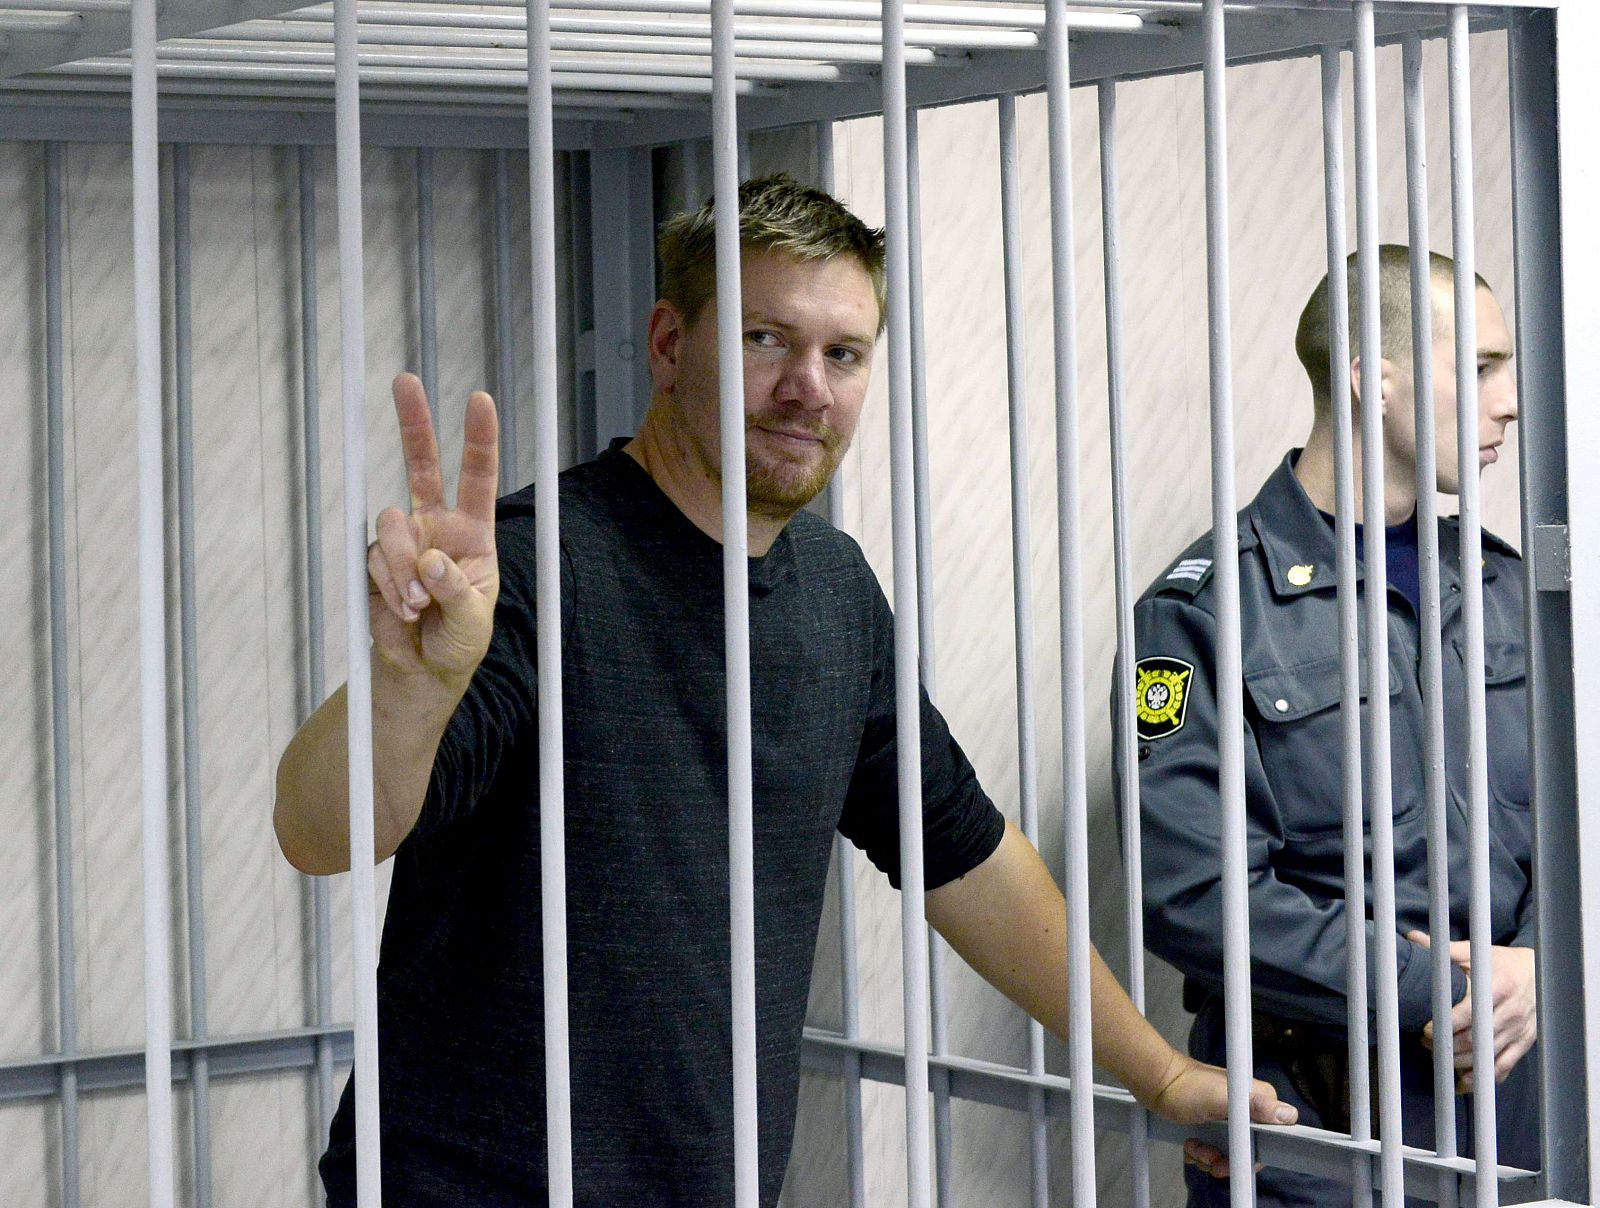 El activista de Greenpeace Anthony Perrett hace la señal de la victoria en el tribunal de Mumrmansk, Rusia